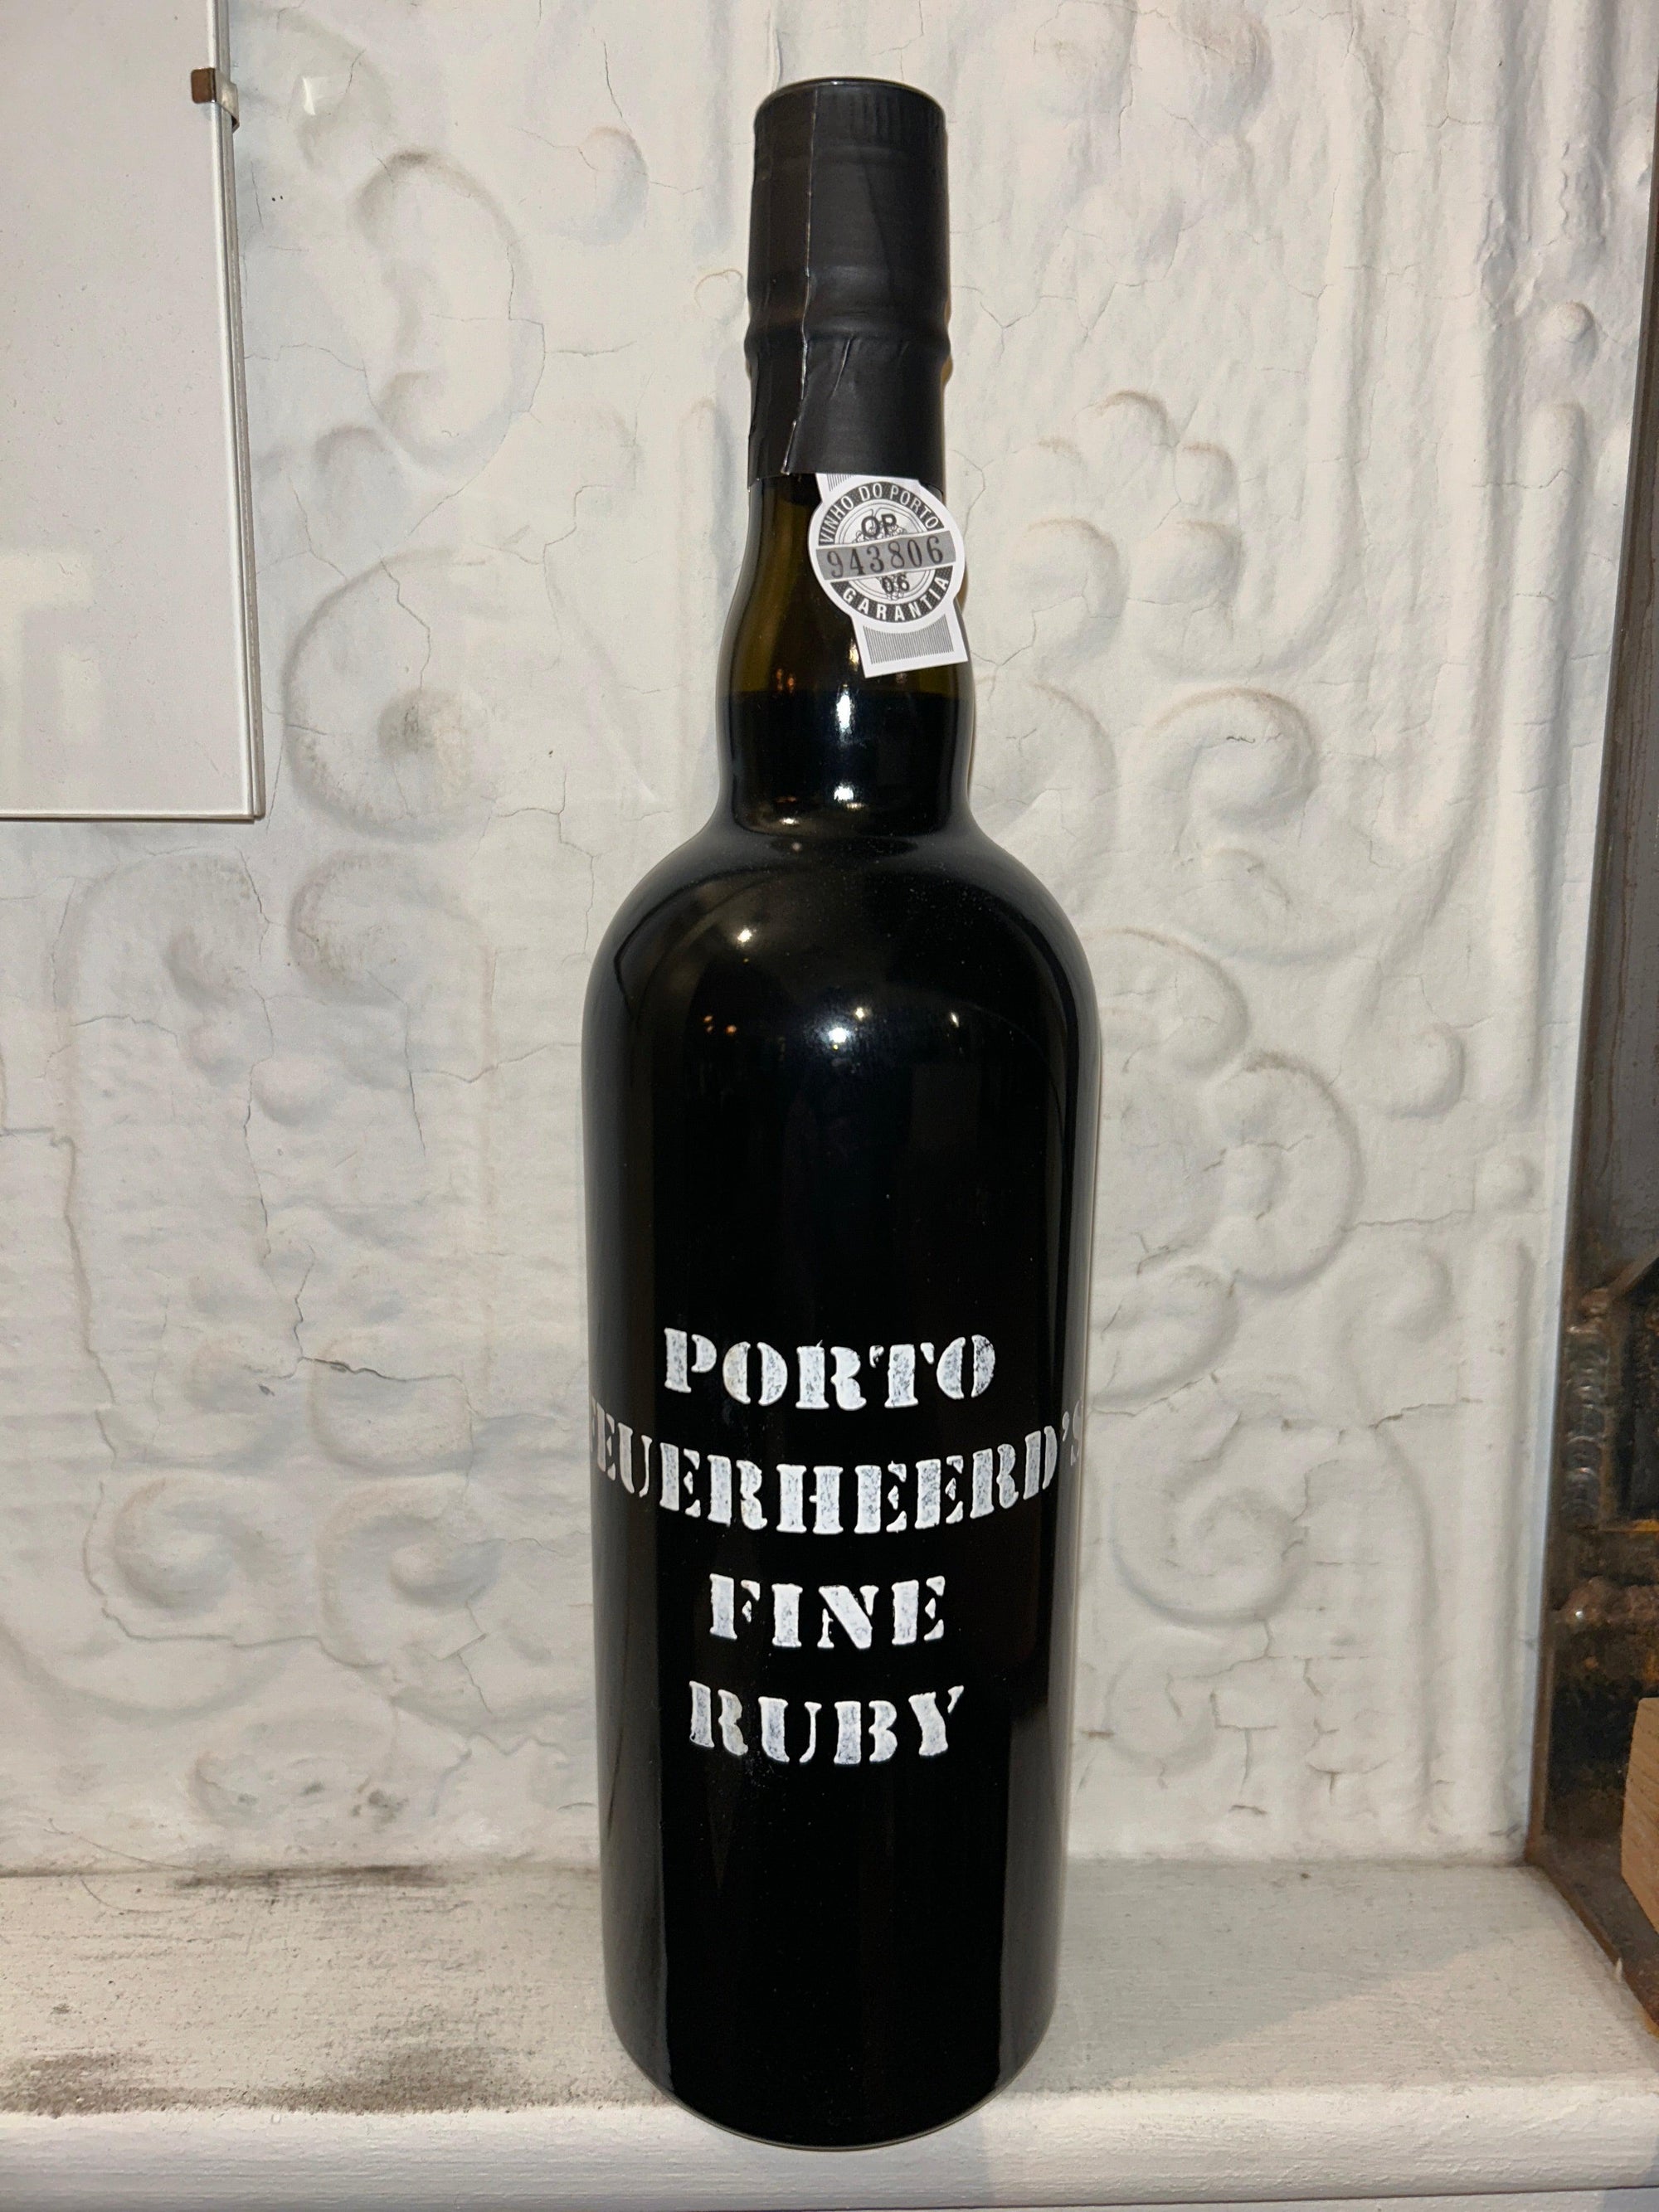 Fine Ruby Port, feuerheerd's NV (Porto, Portugal)-Wine-Bibber & Bell